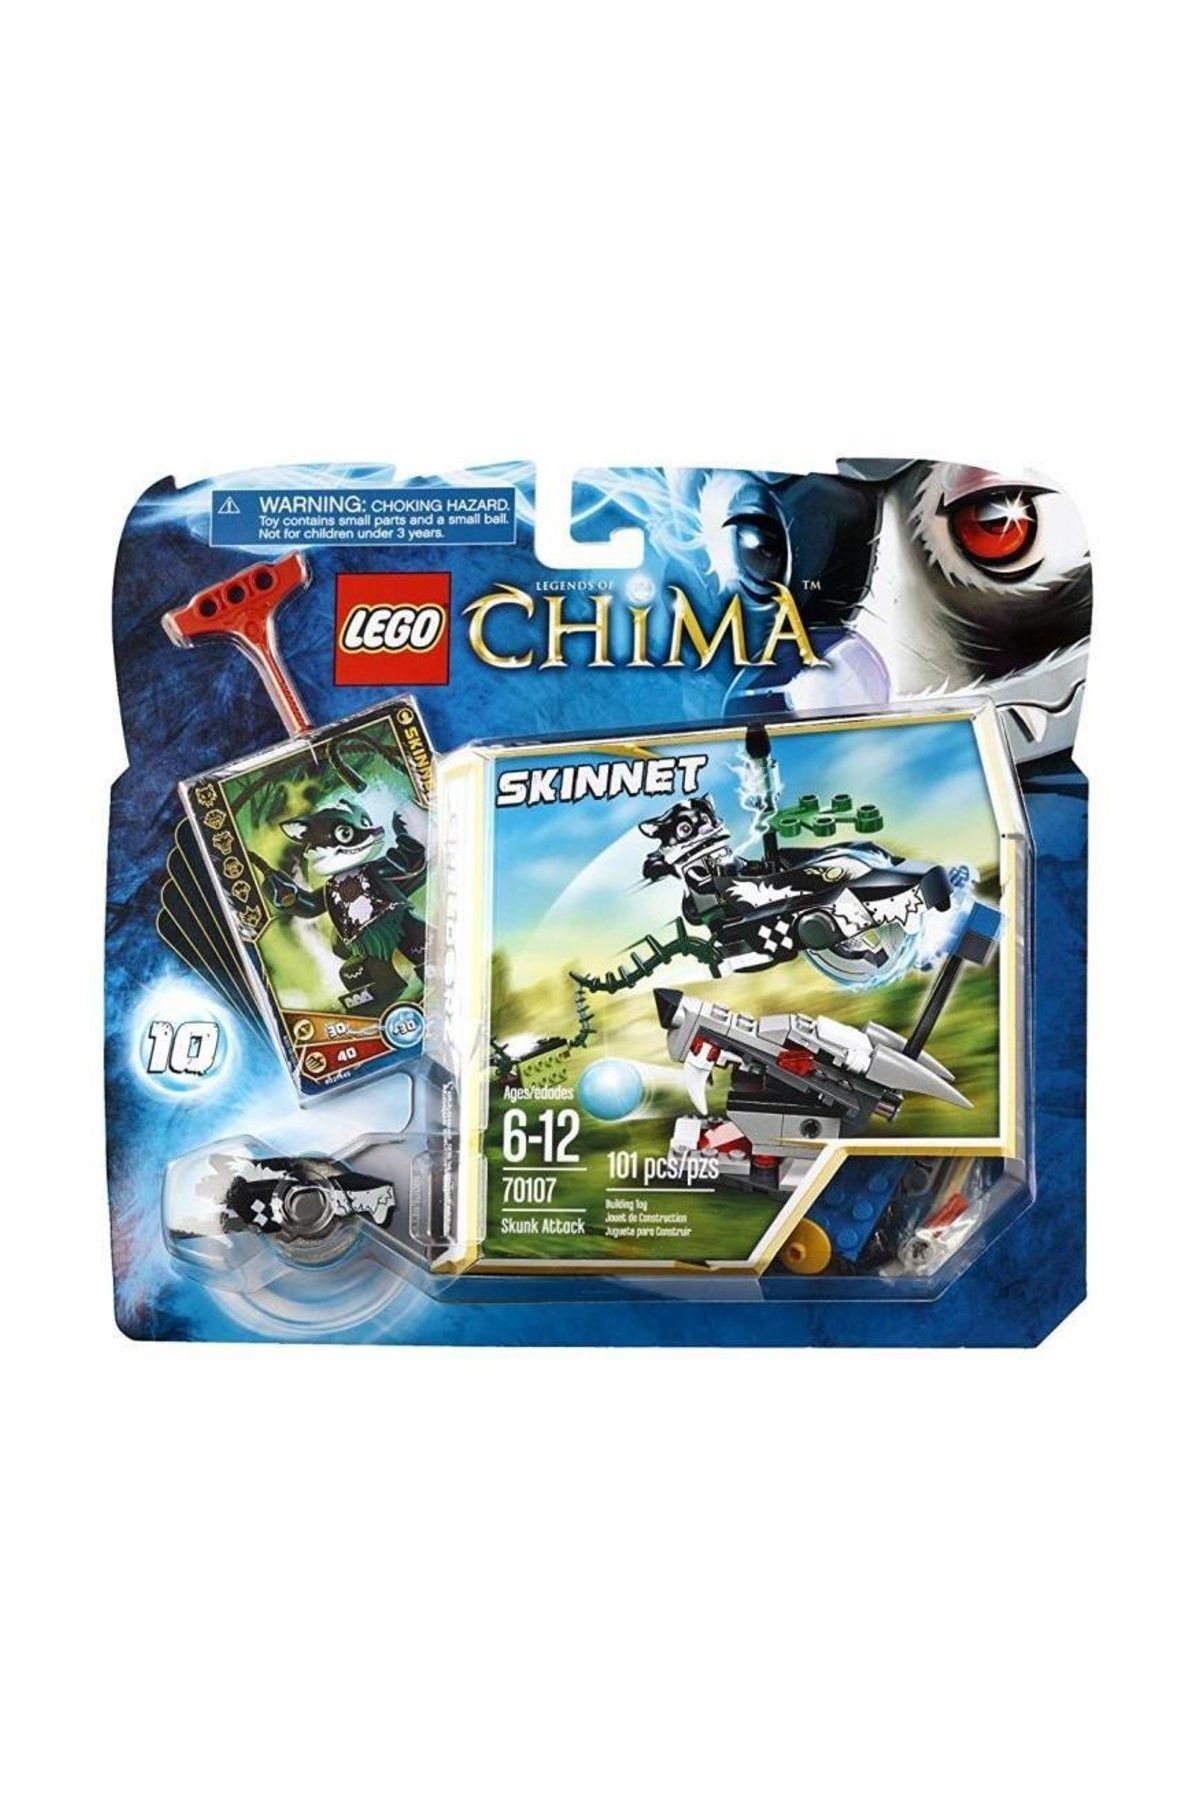 LEGO Legends of Chima 70107 Skunk Attack